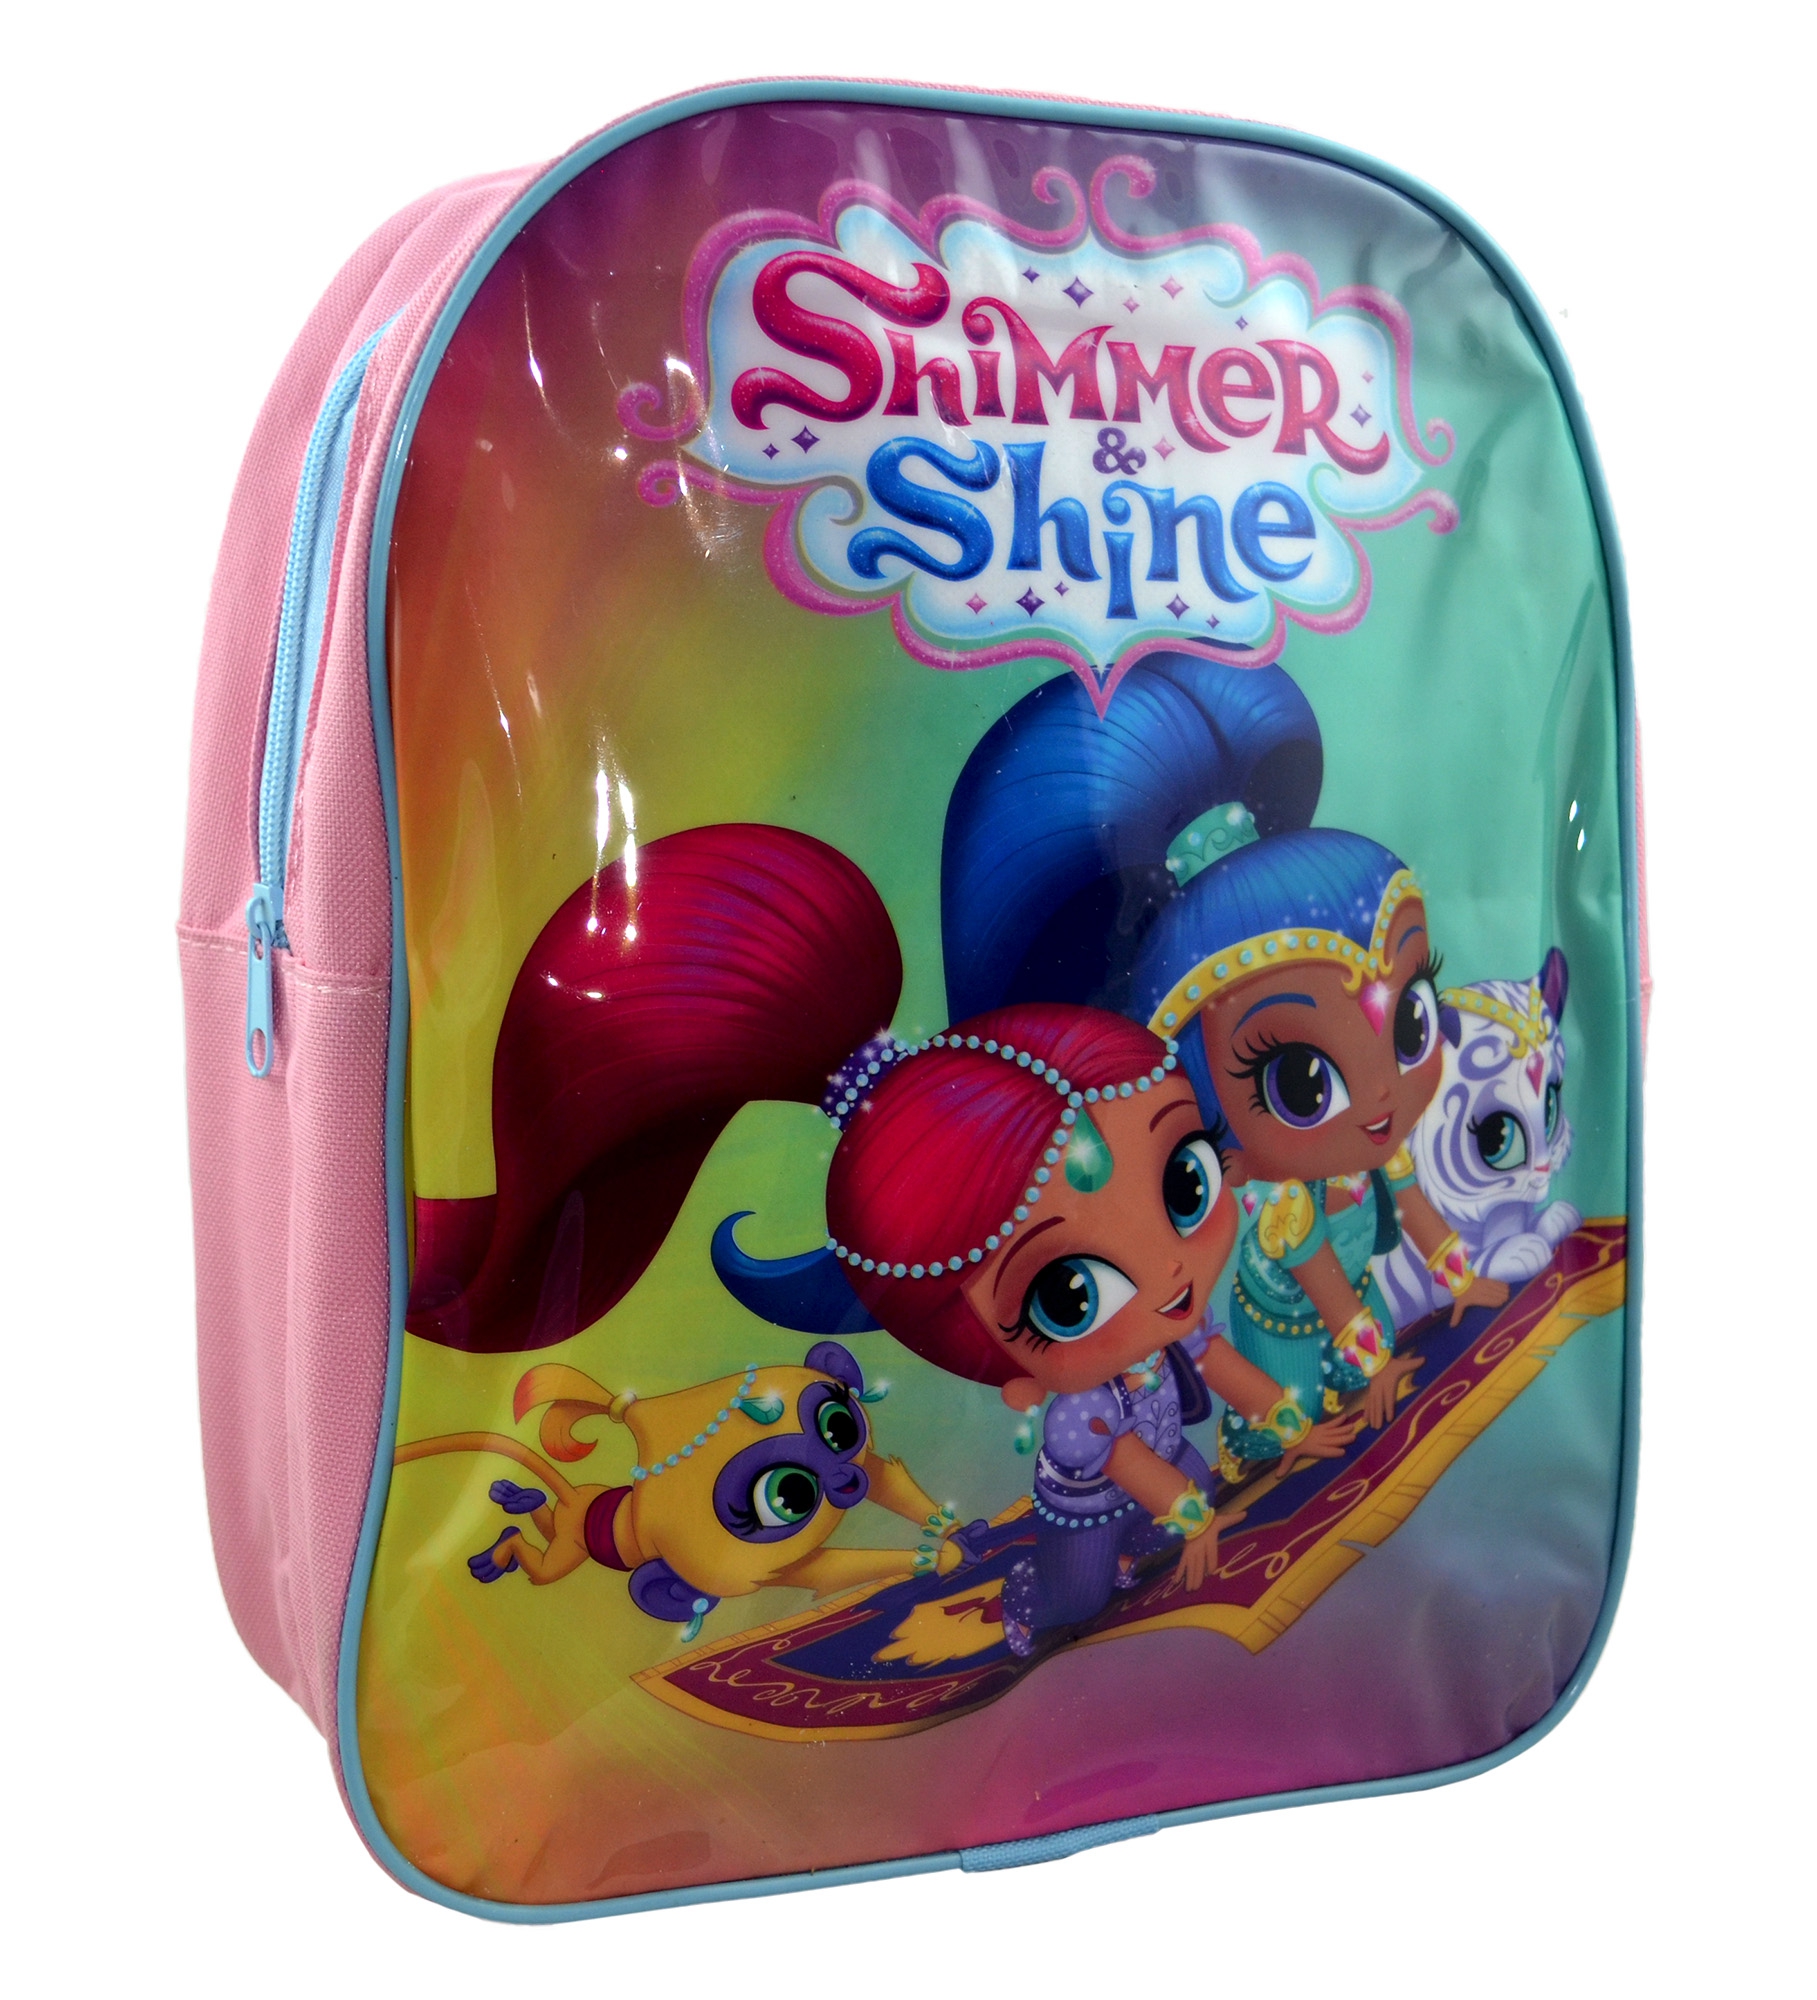 Shimmer & Shine 'Flying' Junior School Bag Rucksack Backpack